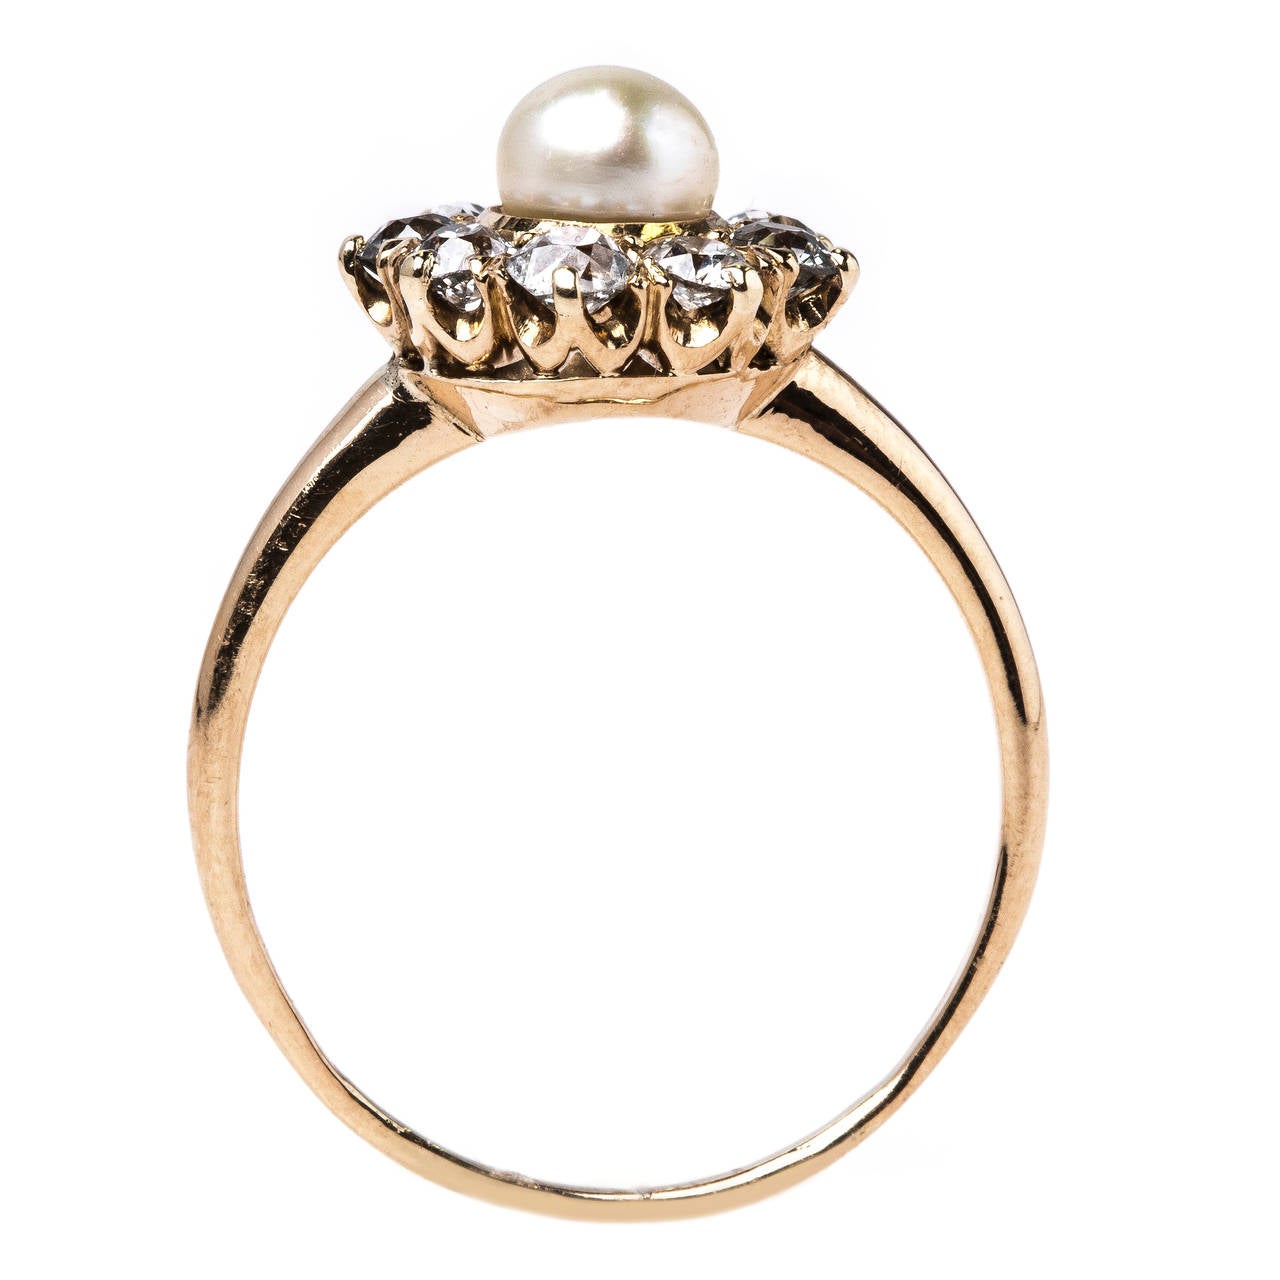 Women's Delicate and Feminine Victorian Era Pearl Ring with Diamond Halo